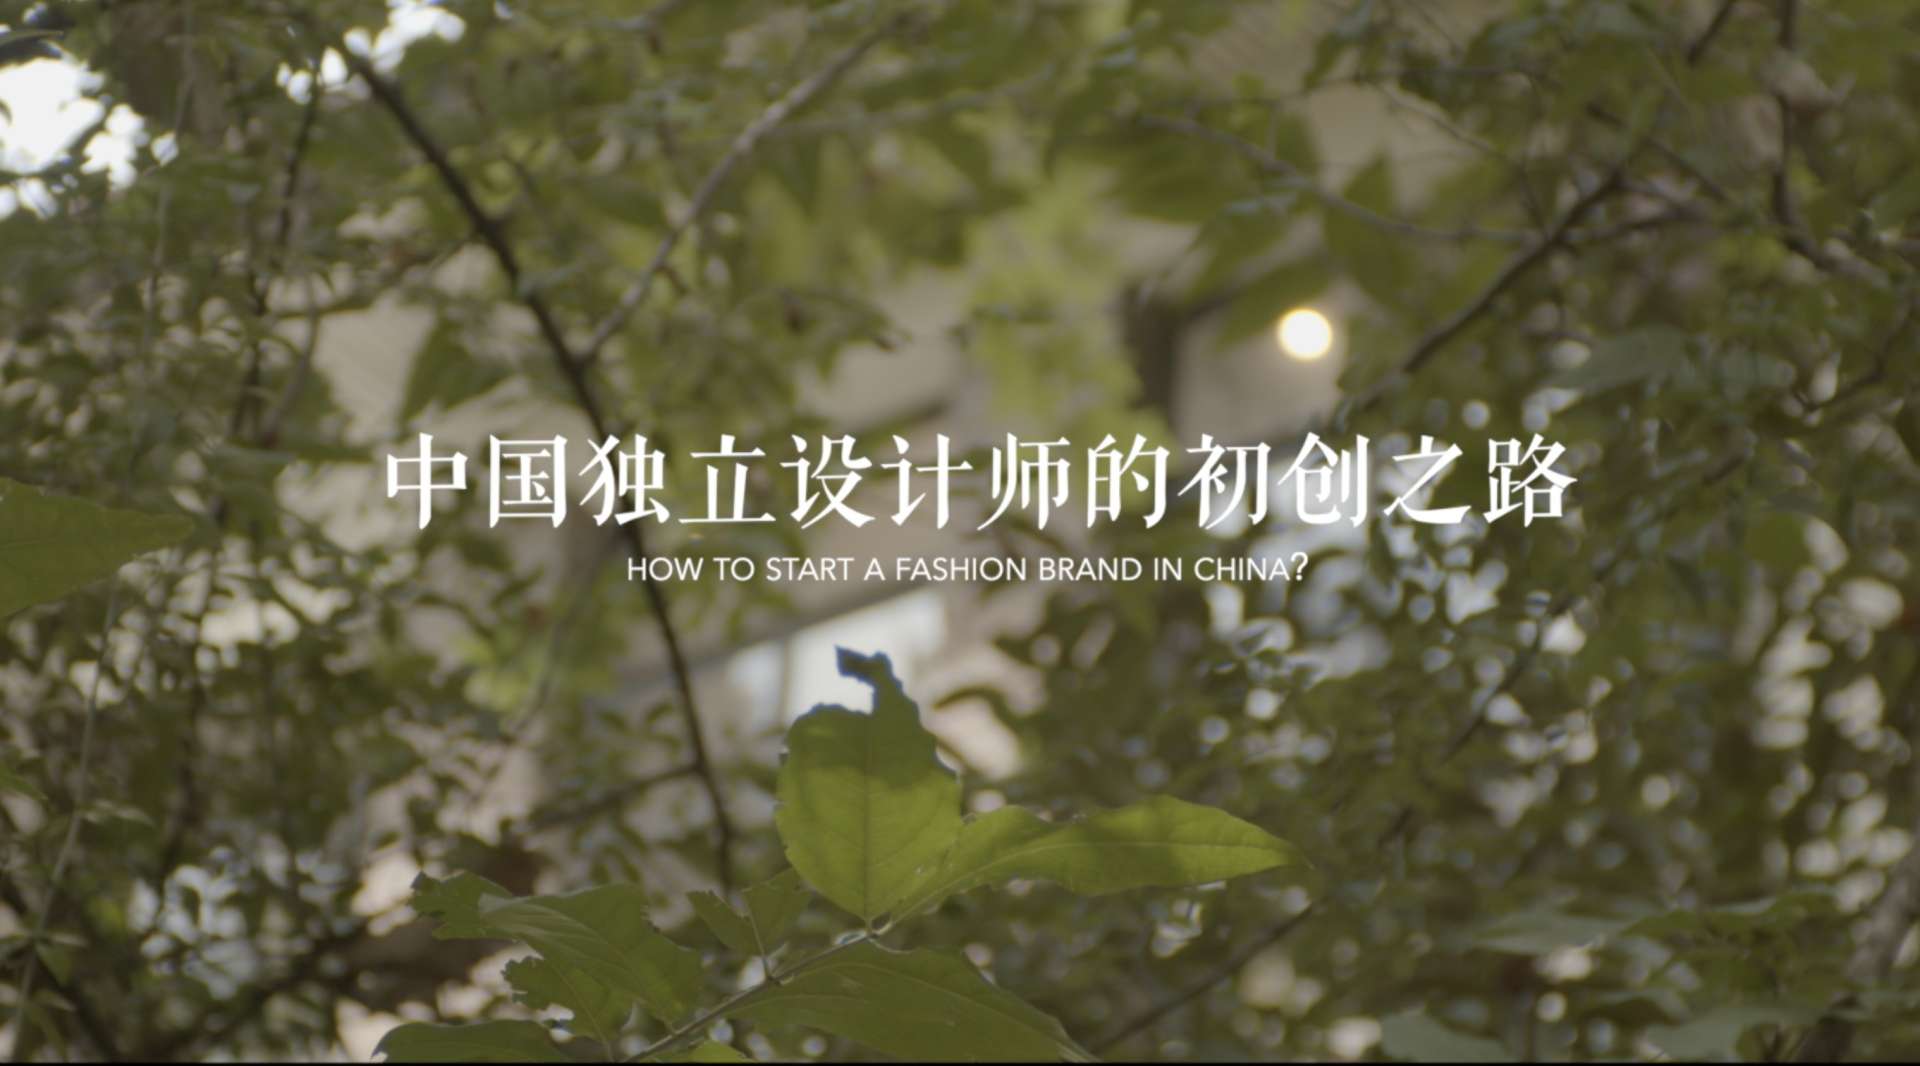 SS2021上海时装周系列纪录片-中国独立设计师的初创之路